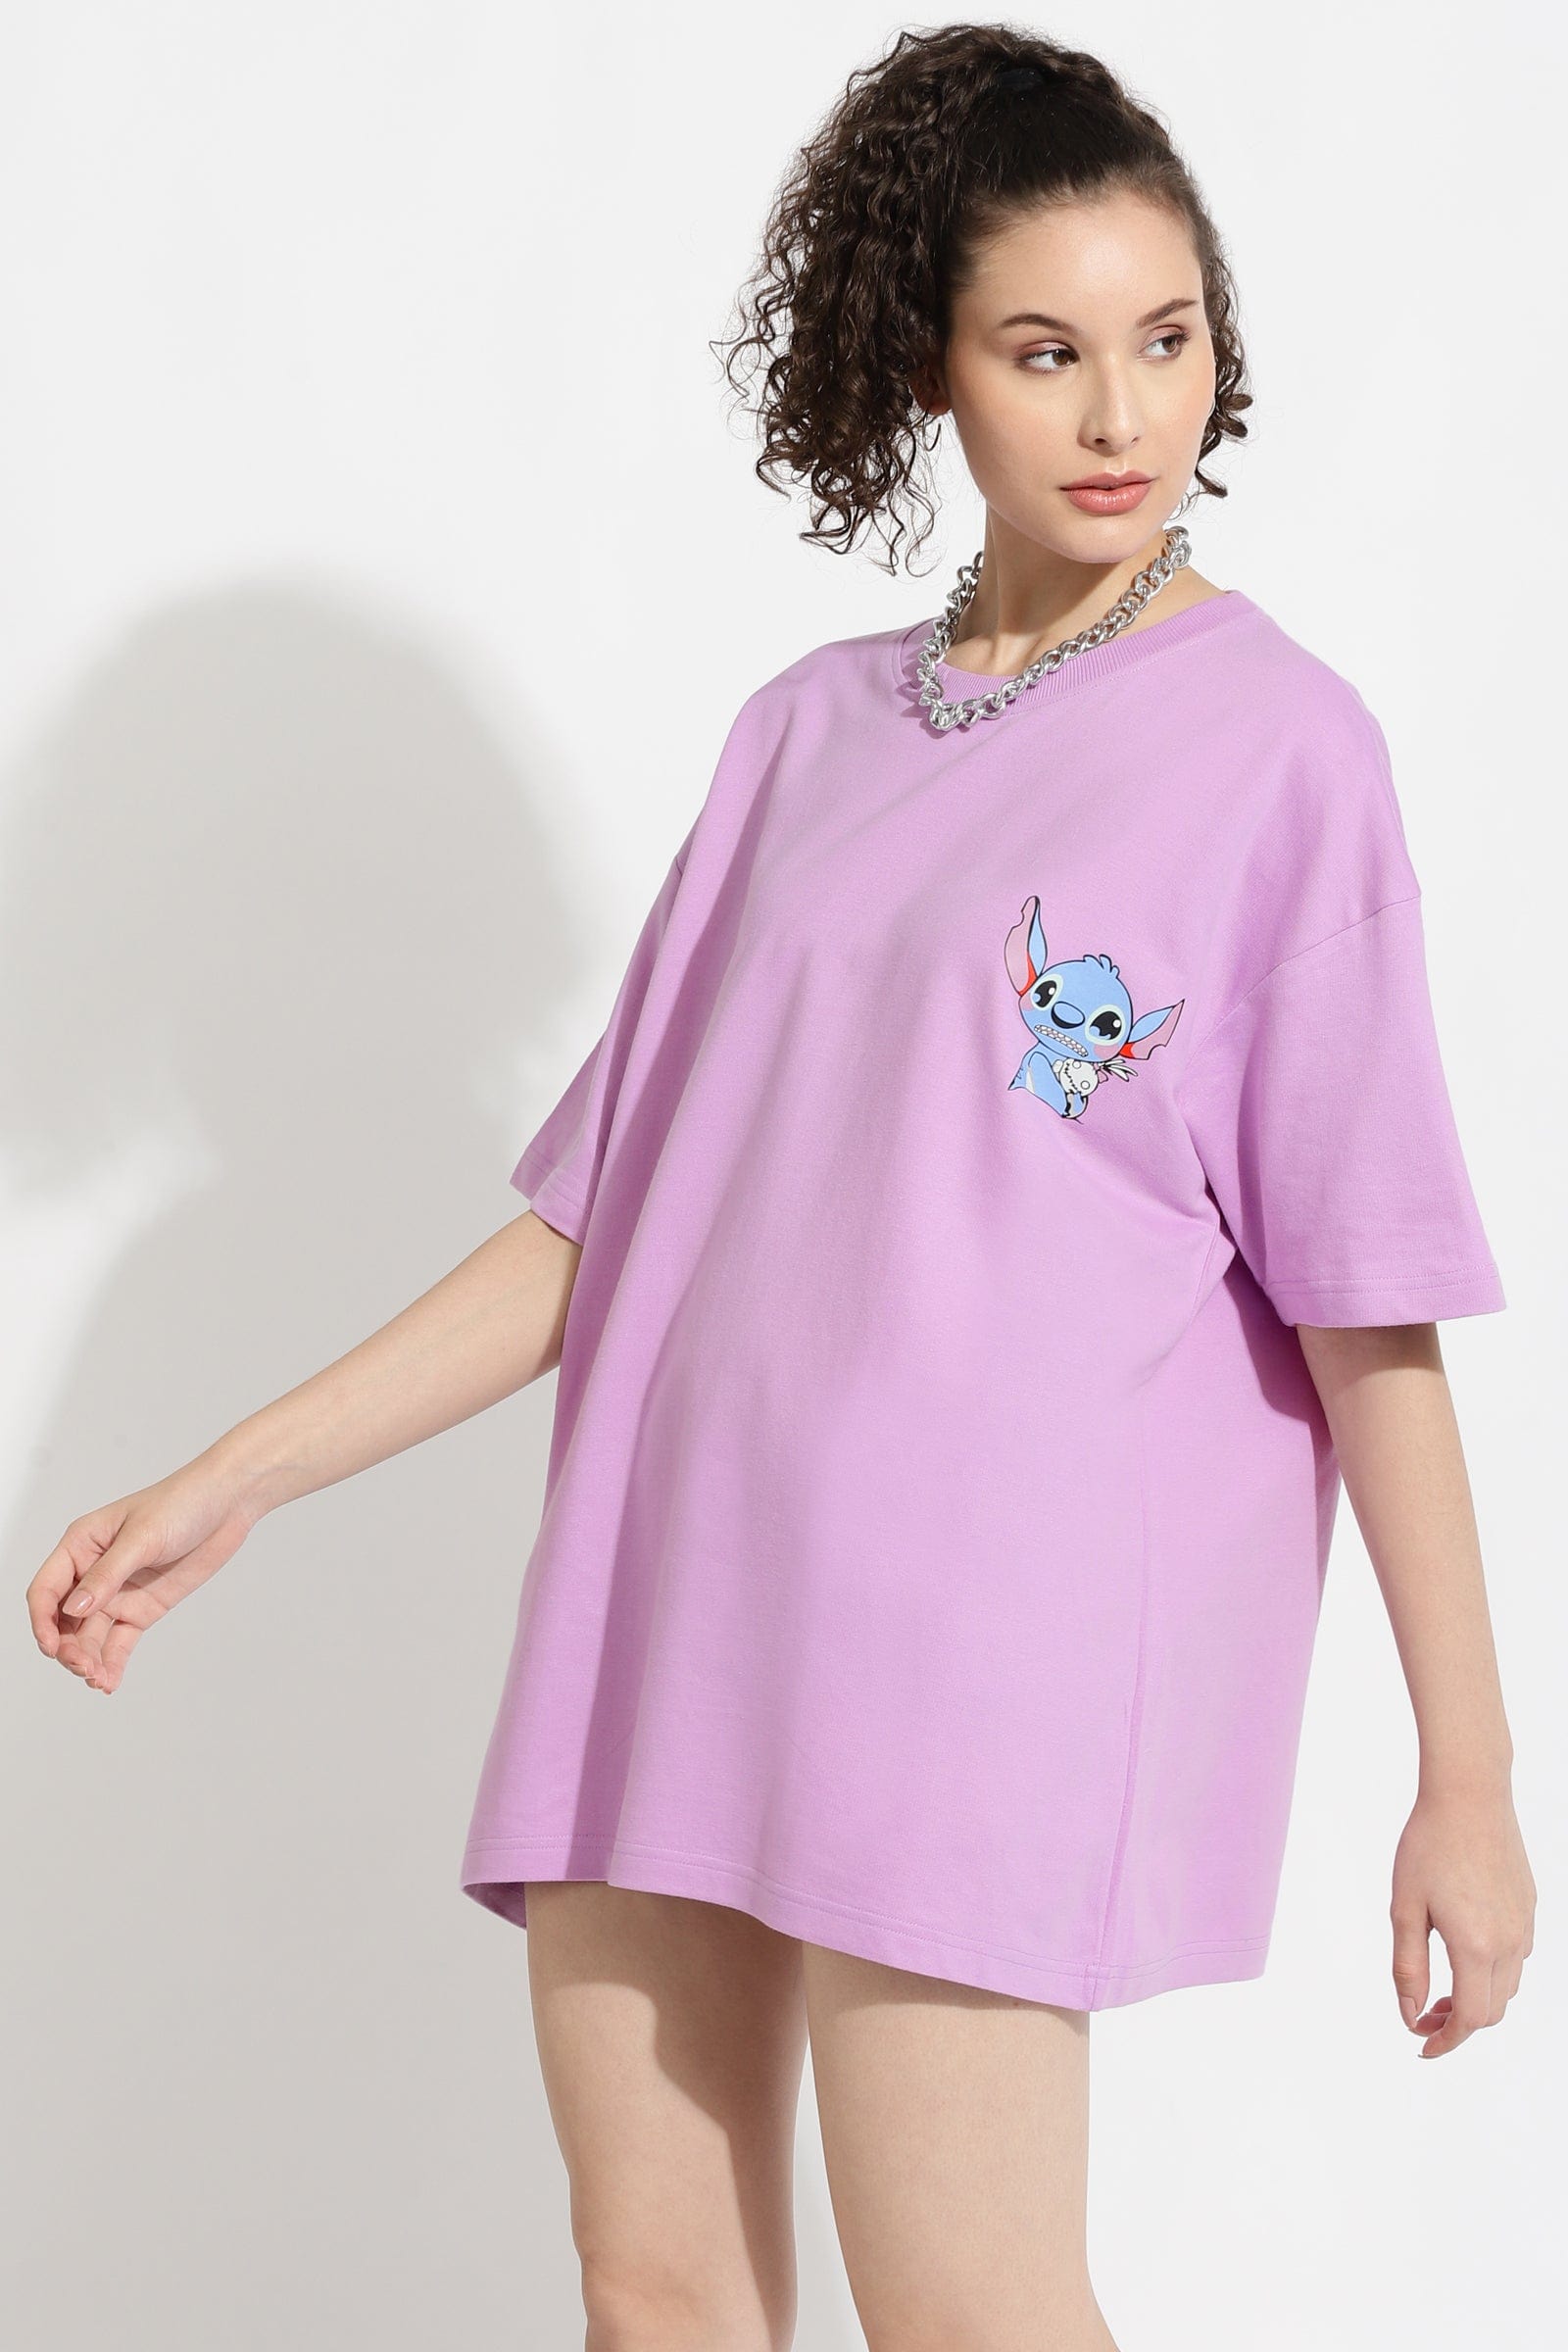 Hanging Bat lilac Oversized Unisex T-Shirt By Purple Mango